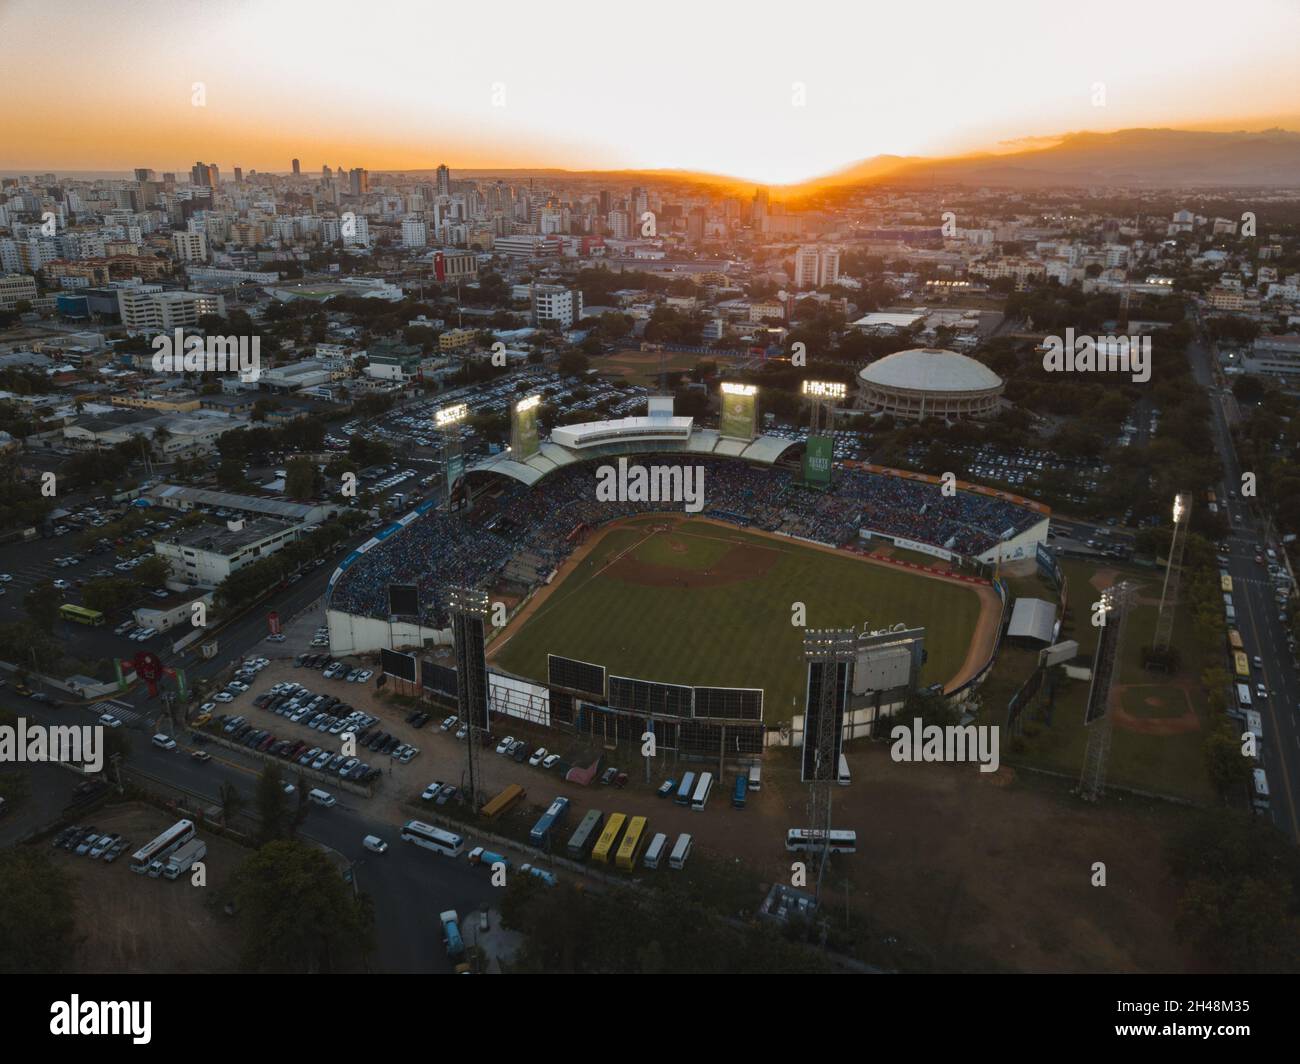 SANTO DOMINGO, DOMINICAN REPUBLIC - Dec 02, 2018: A landscapef the Quisqueya Baseball Stadium during the sunset in Santo Domingo, Dominican Republic Stock Photo